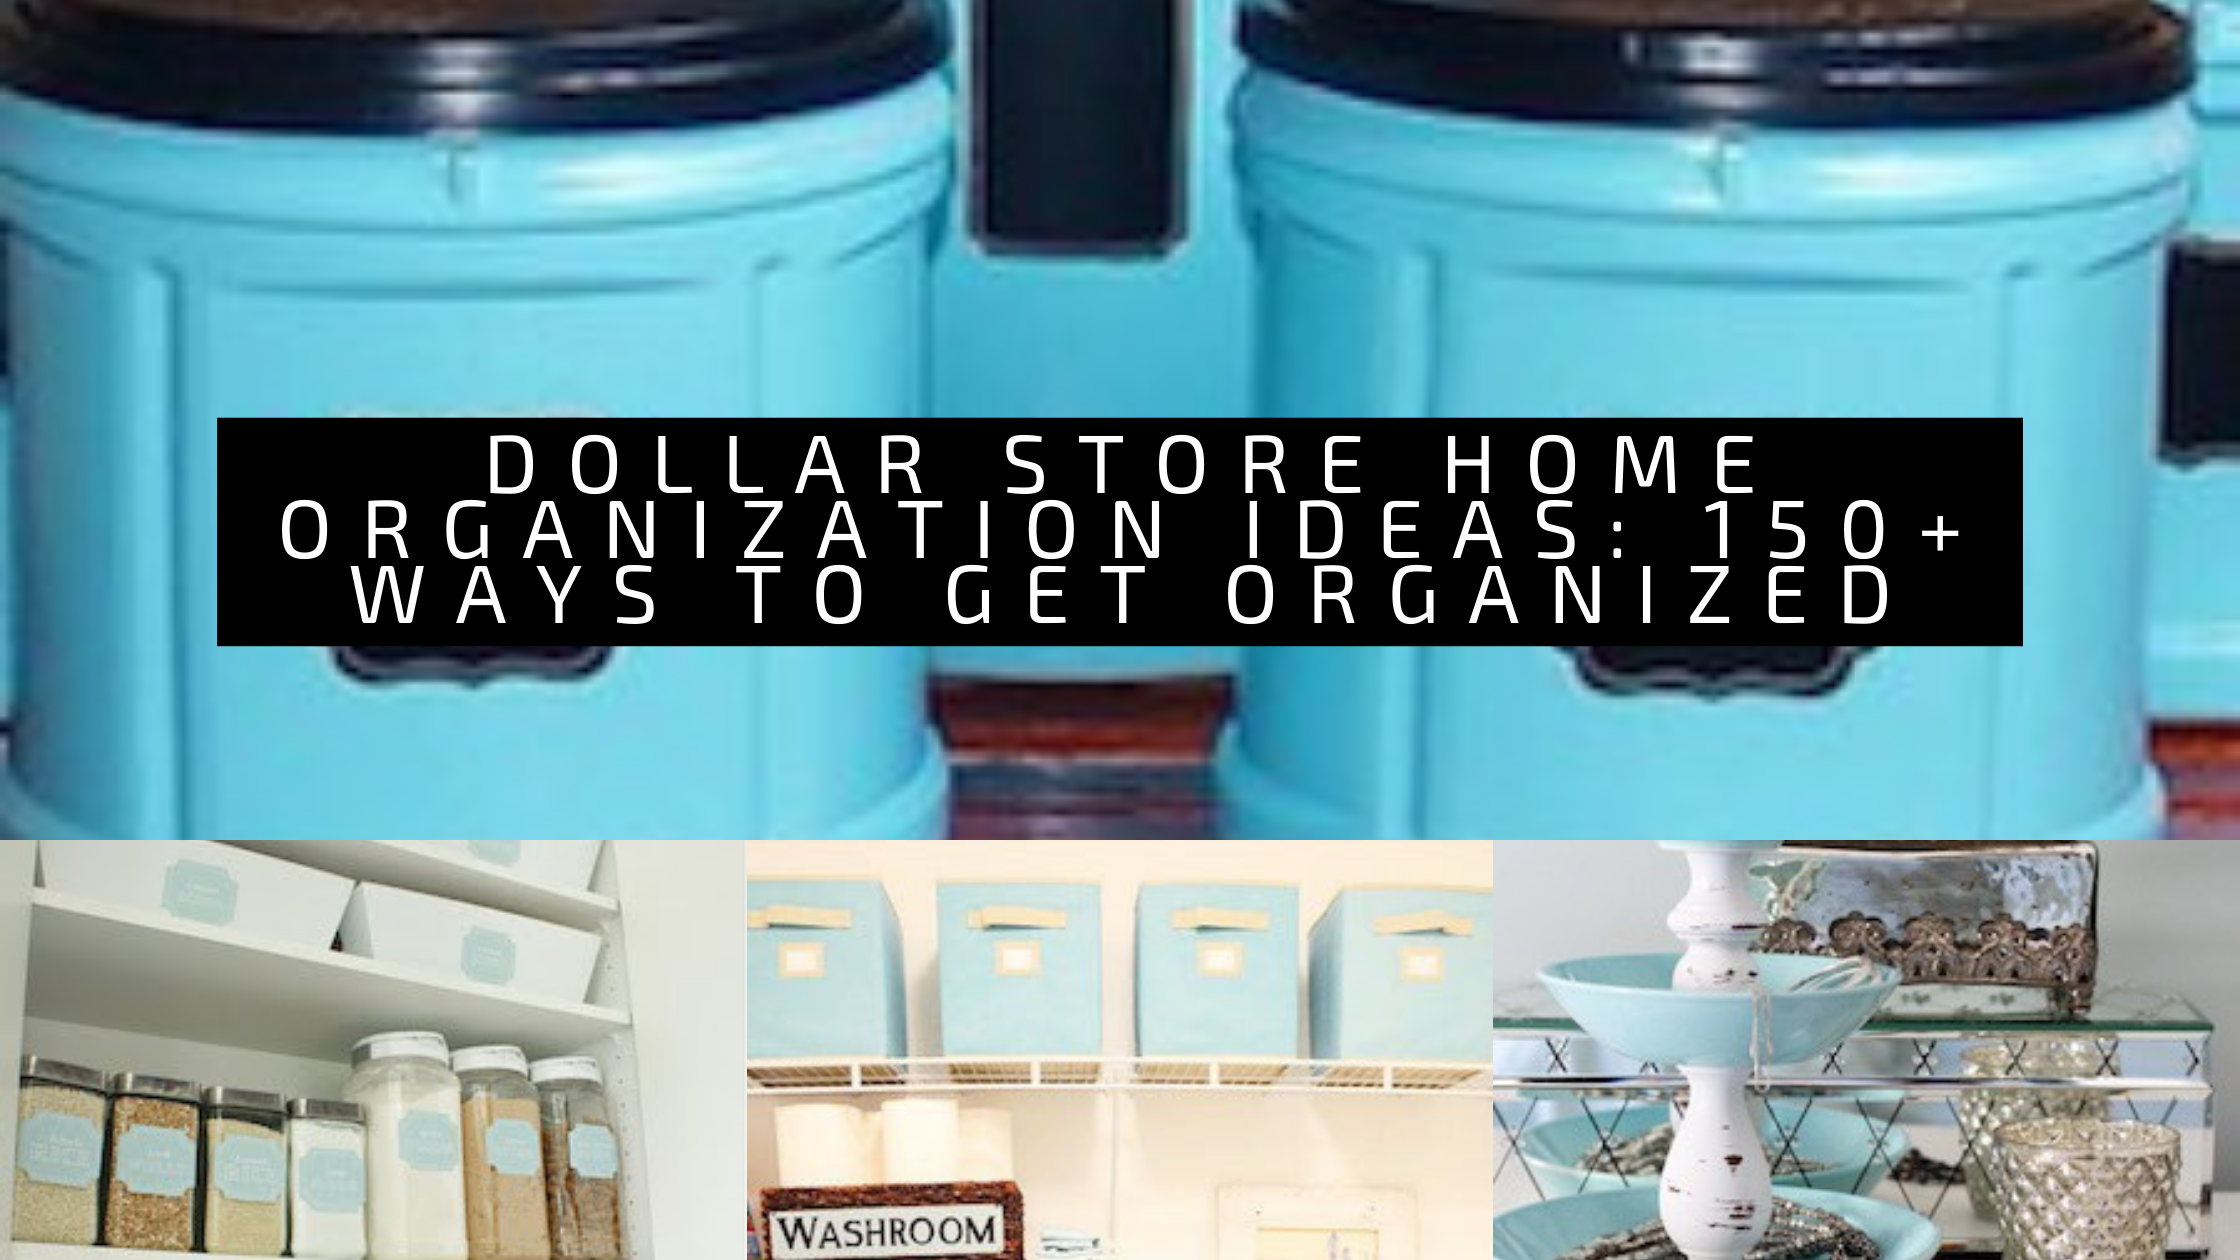 Dollar Store Home Organization Ideas: 150+ Ways to Get Organized 15